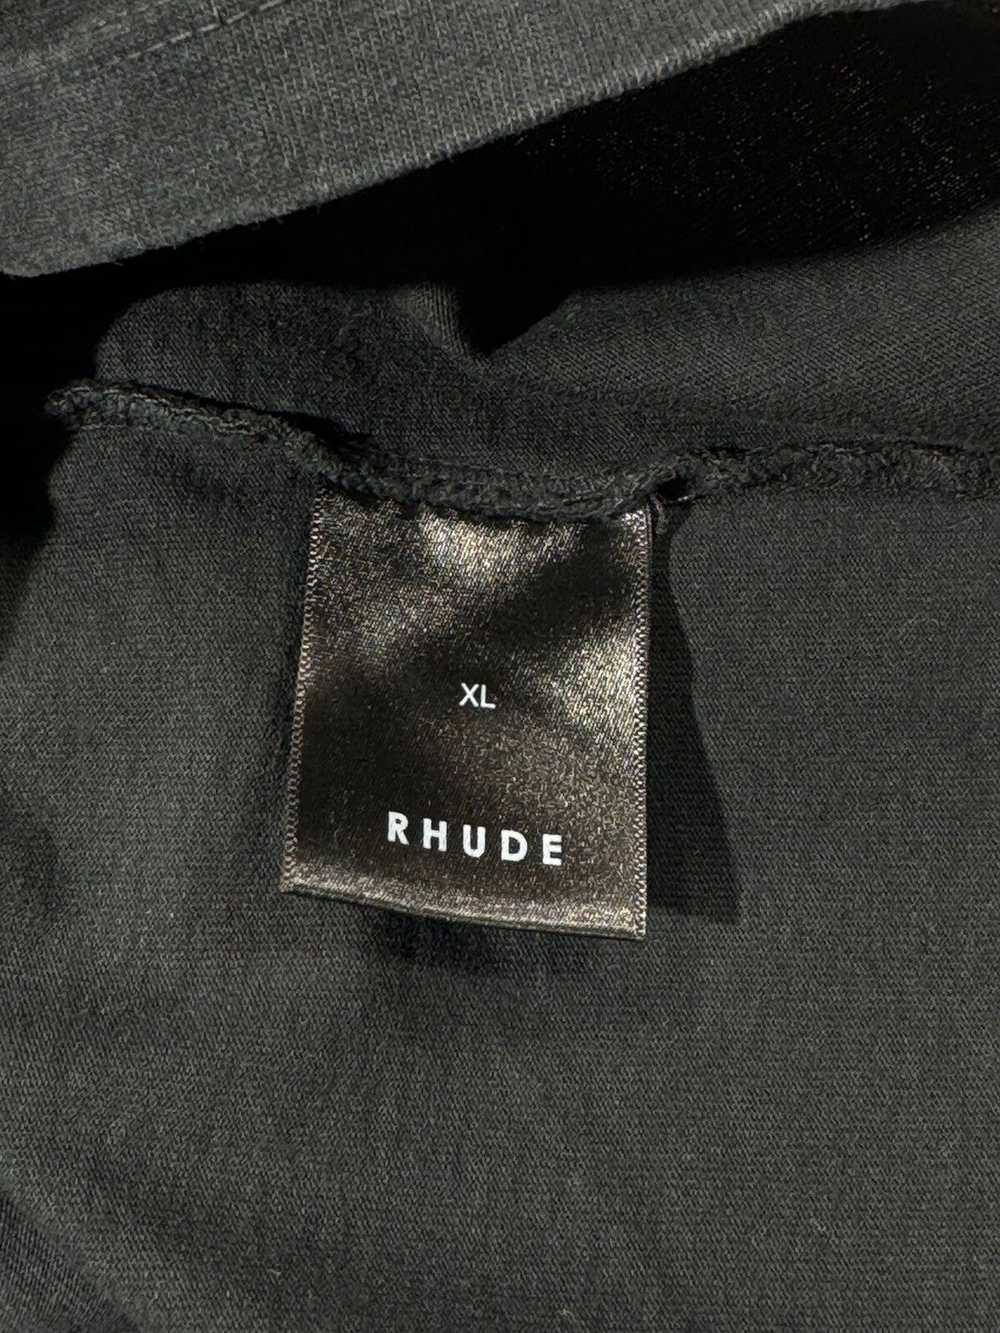 Rhude Rhude Lasso Short SleeveTee Size XL - image 4